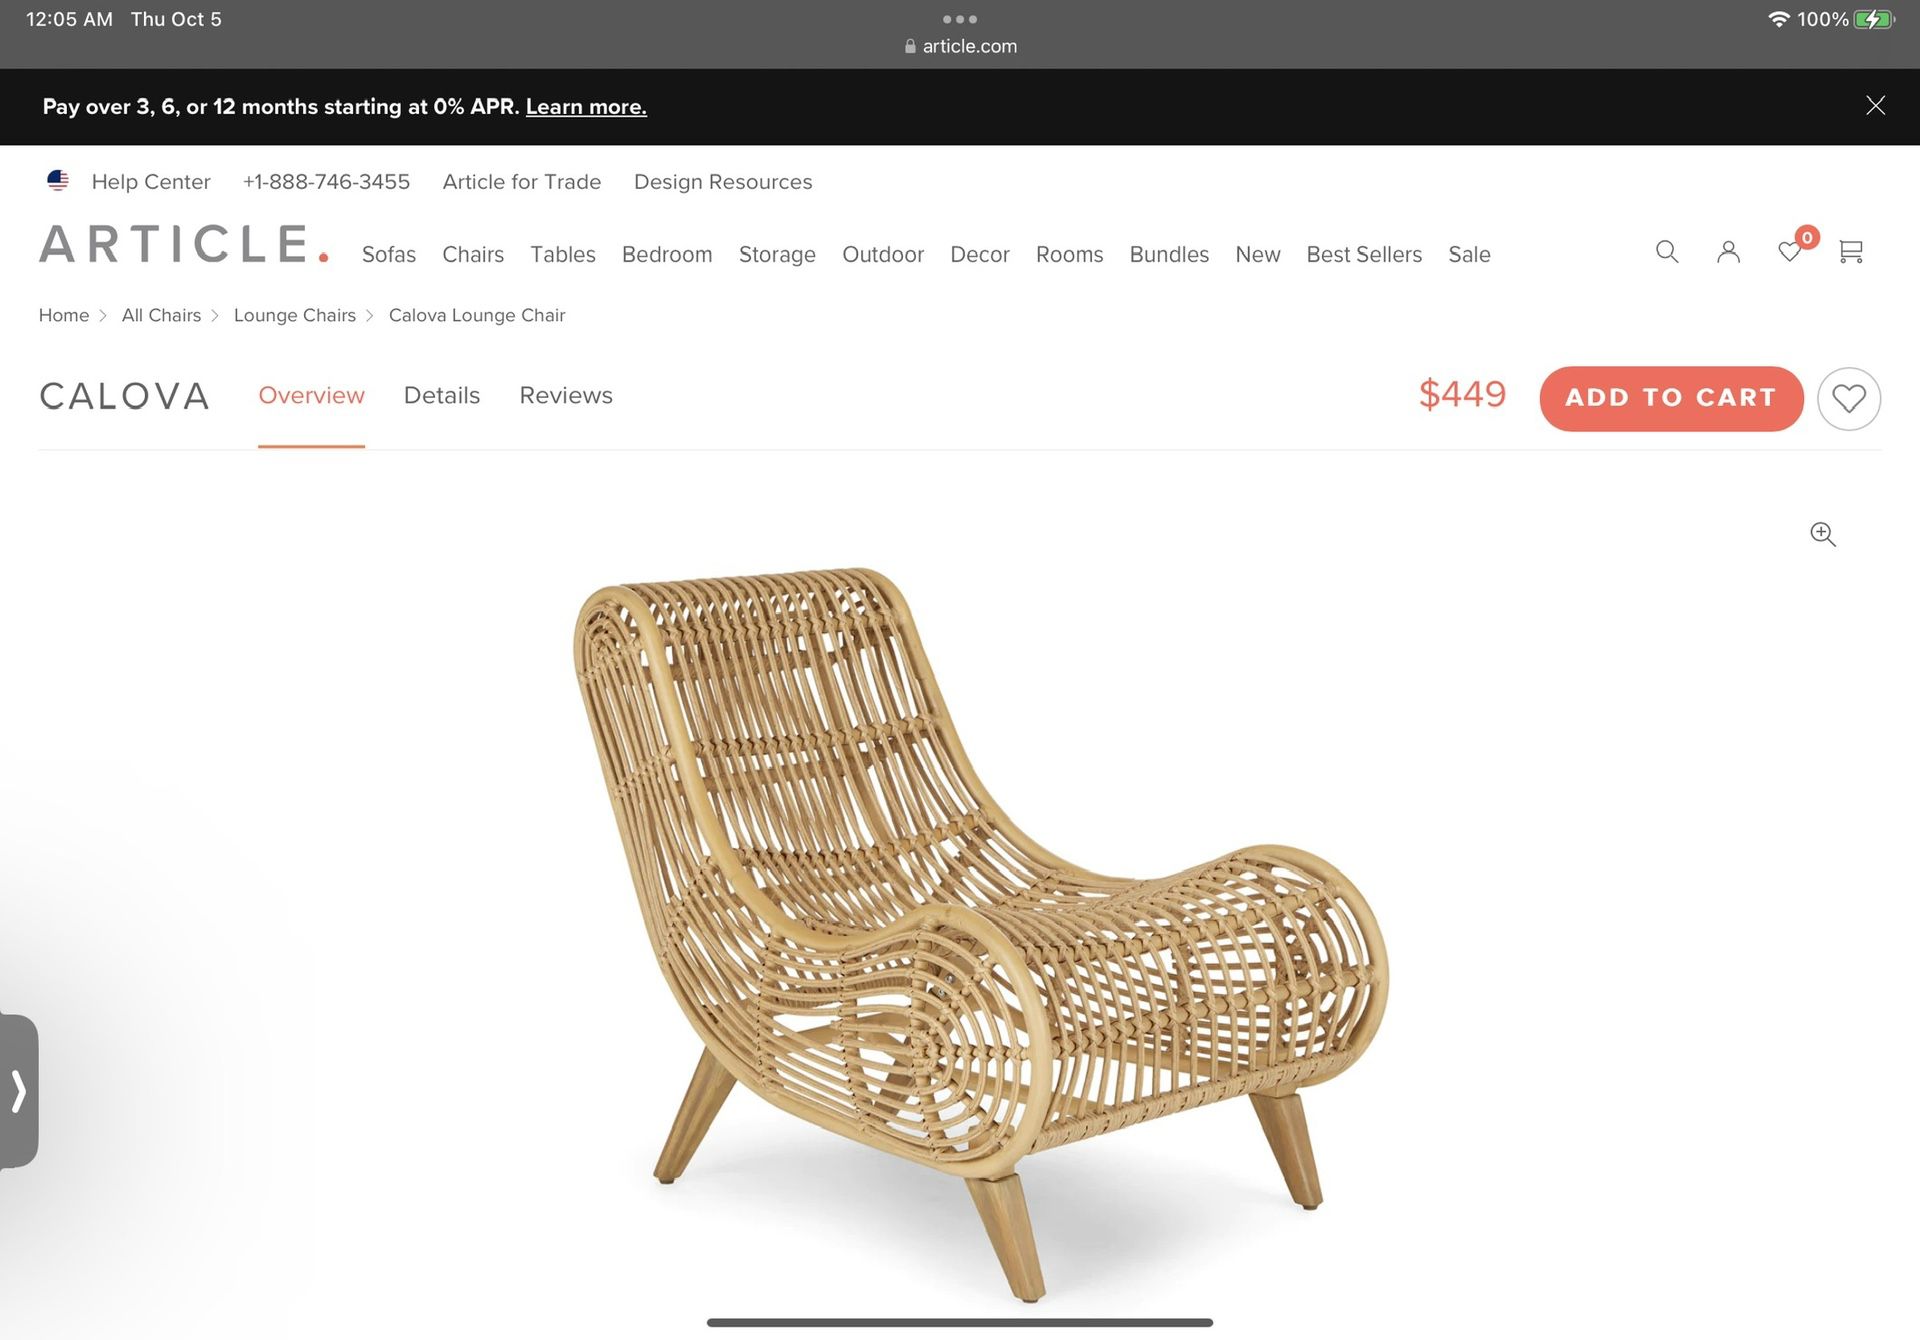 Article. “Calova” Lounge Chair (Indoor / Outdoor) Retail Price $449